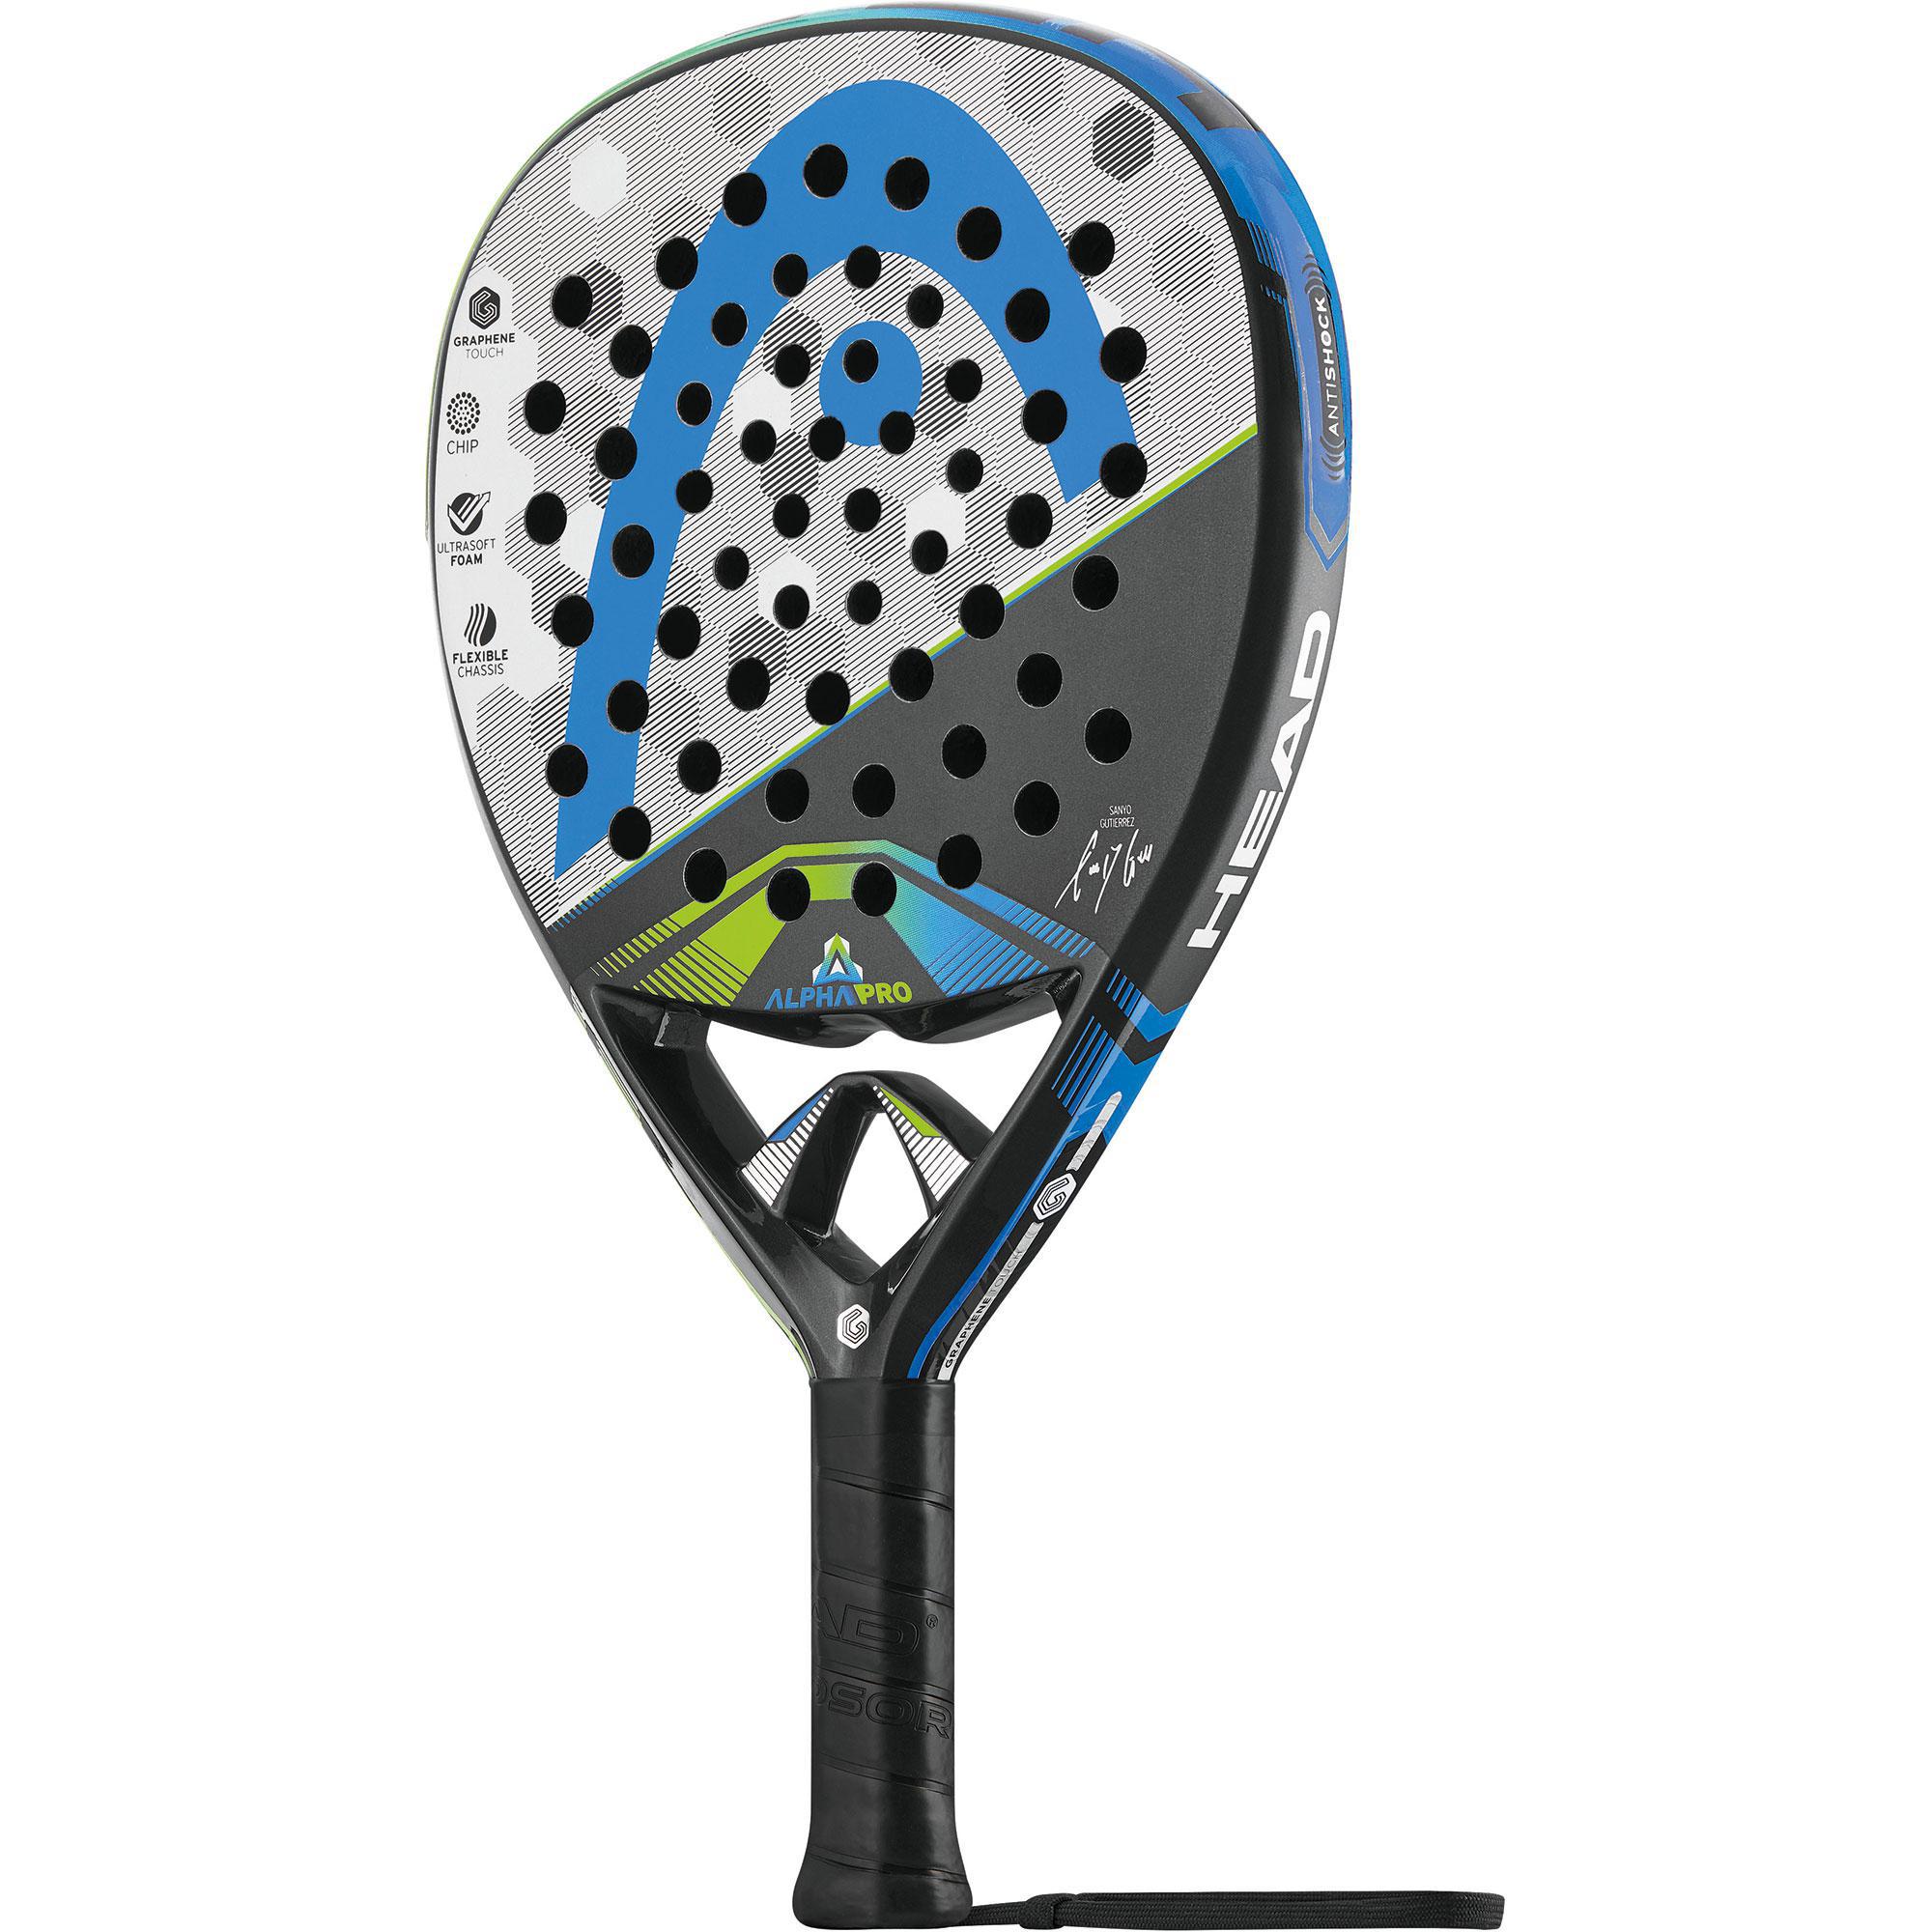 Head Graphene Touch Alpha Pro Padel Racket - Tennisnuts.com